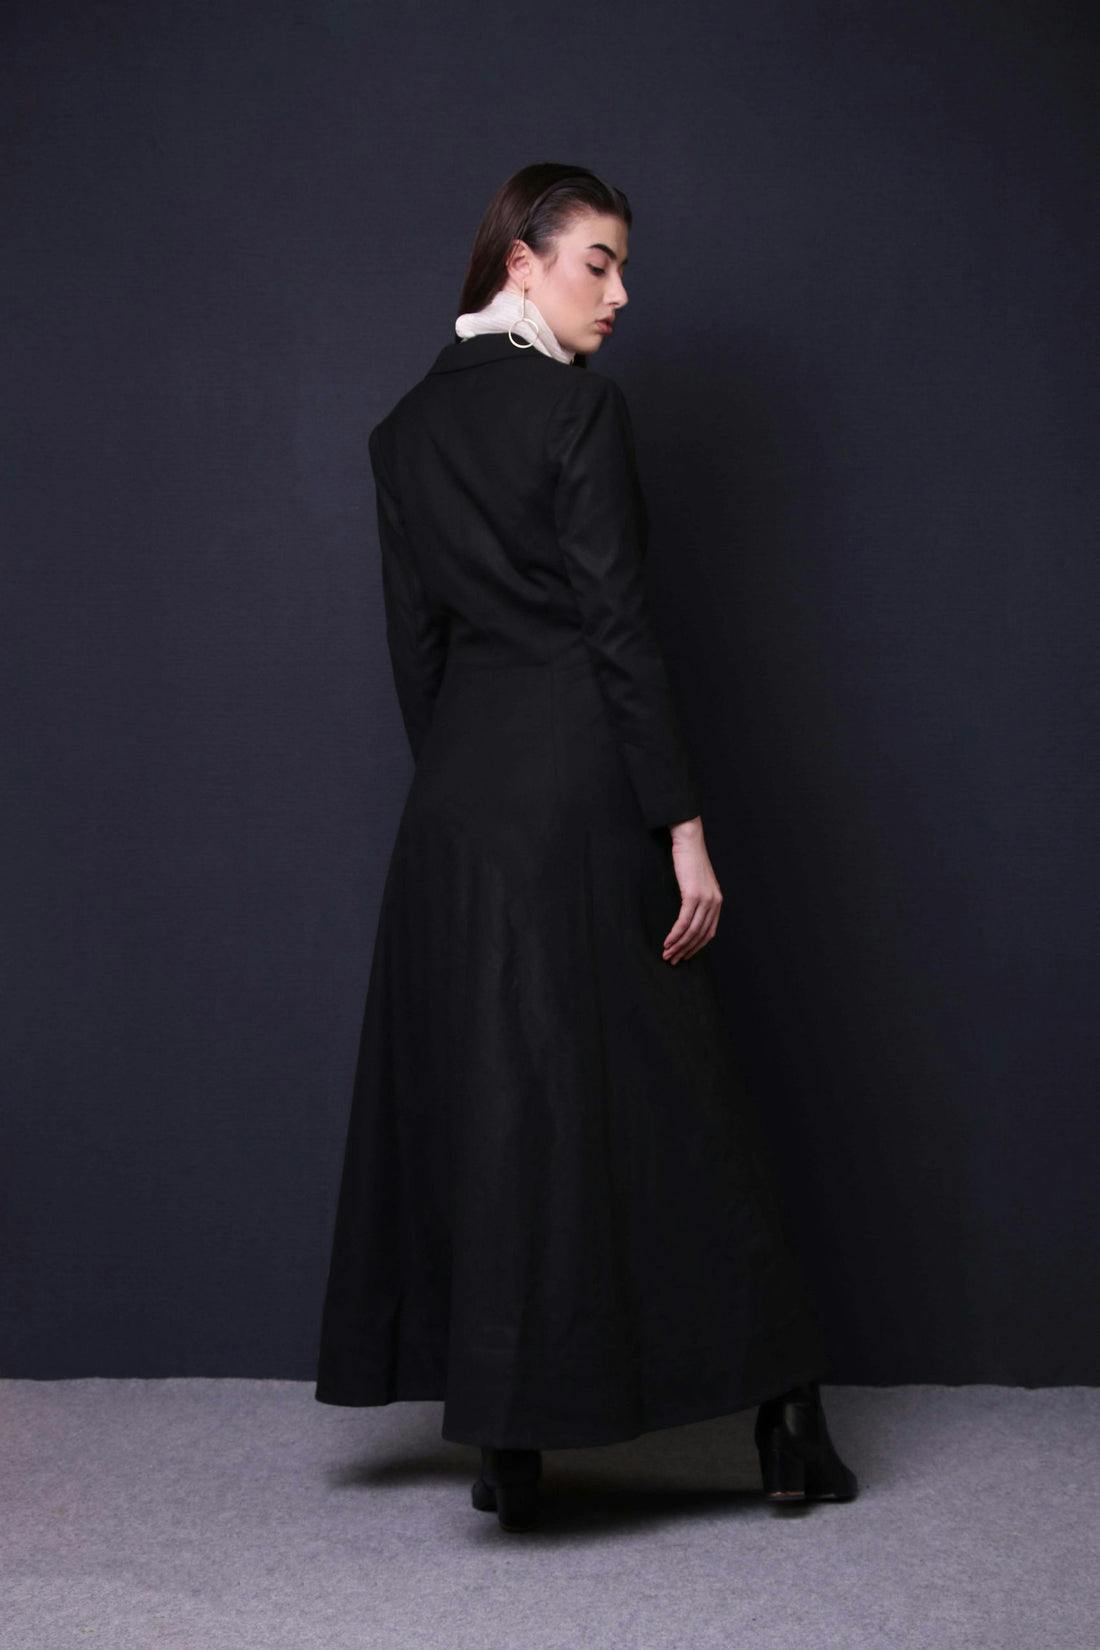 Thumbnail preview #2 for Long Black Dress